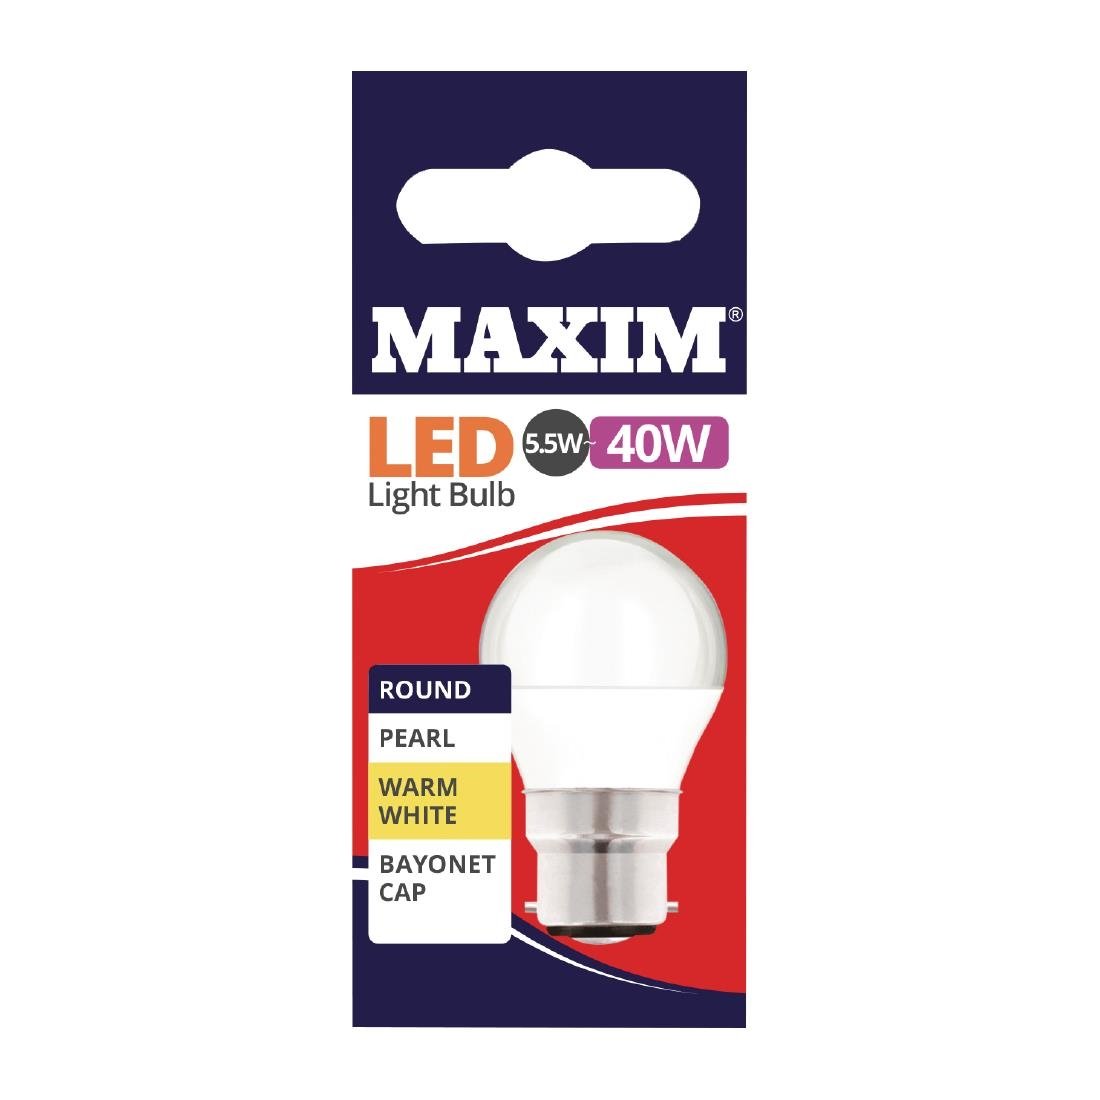 FW510 Maxim LED Round BC Warm White Light Bulb 6/40w JD Catering Equipment Solutions Ltd